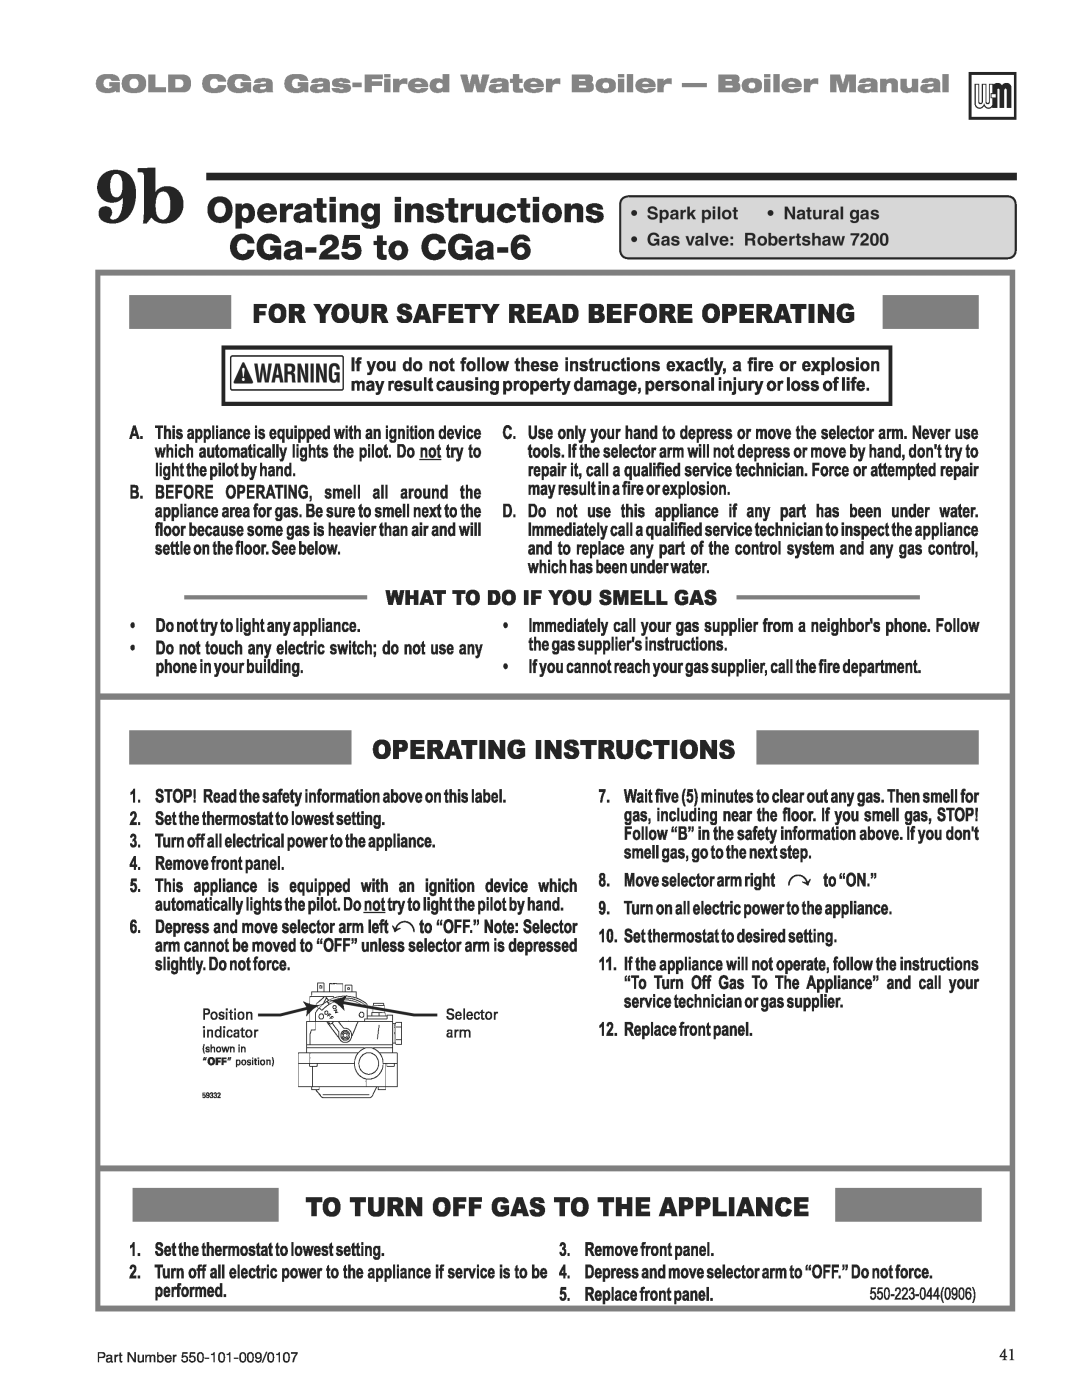 Weil-McLain CGA25SPDN manual 9b Operating instructions CGa-25to CGa-6, GOLD CGa Gas-FiredWater Boiler - Boiler Manual 